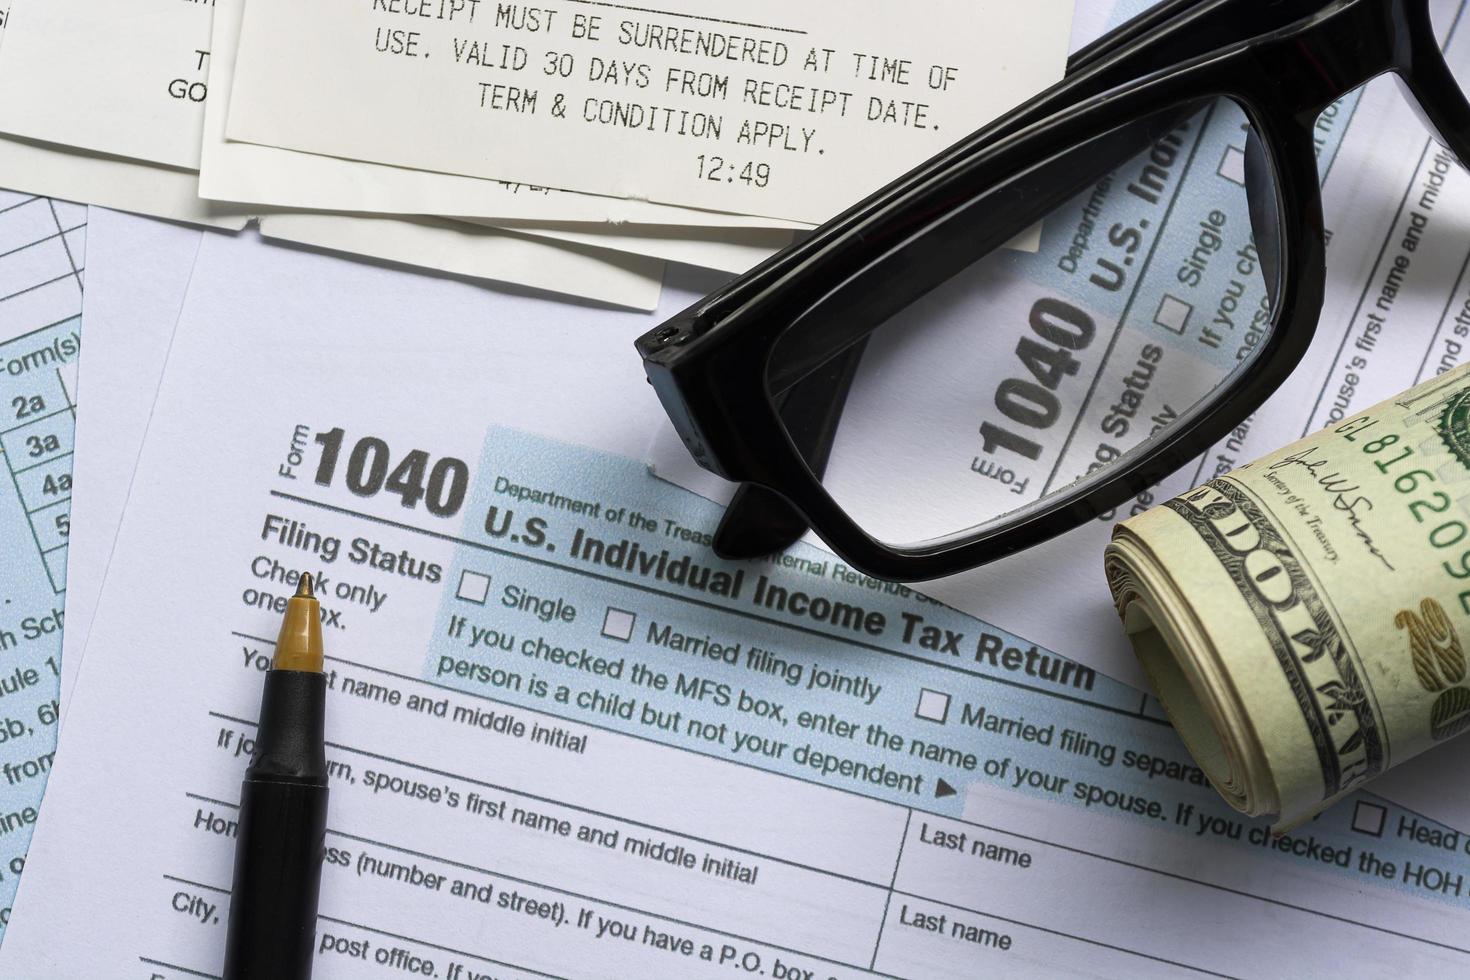 belastingformulieren 1040. ons individuele aangifte inkomstenbelasting met andere briefpapier. foto